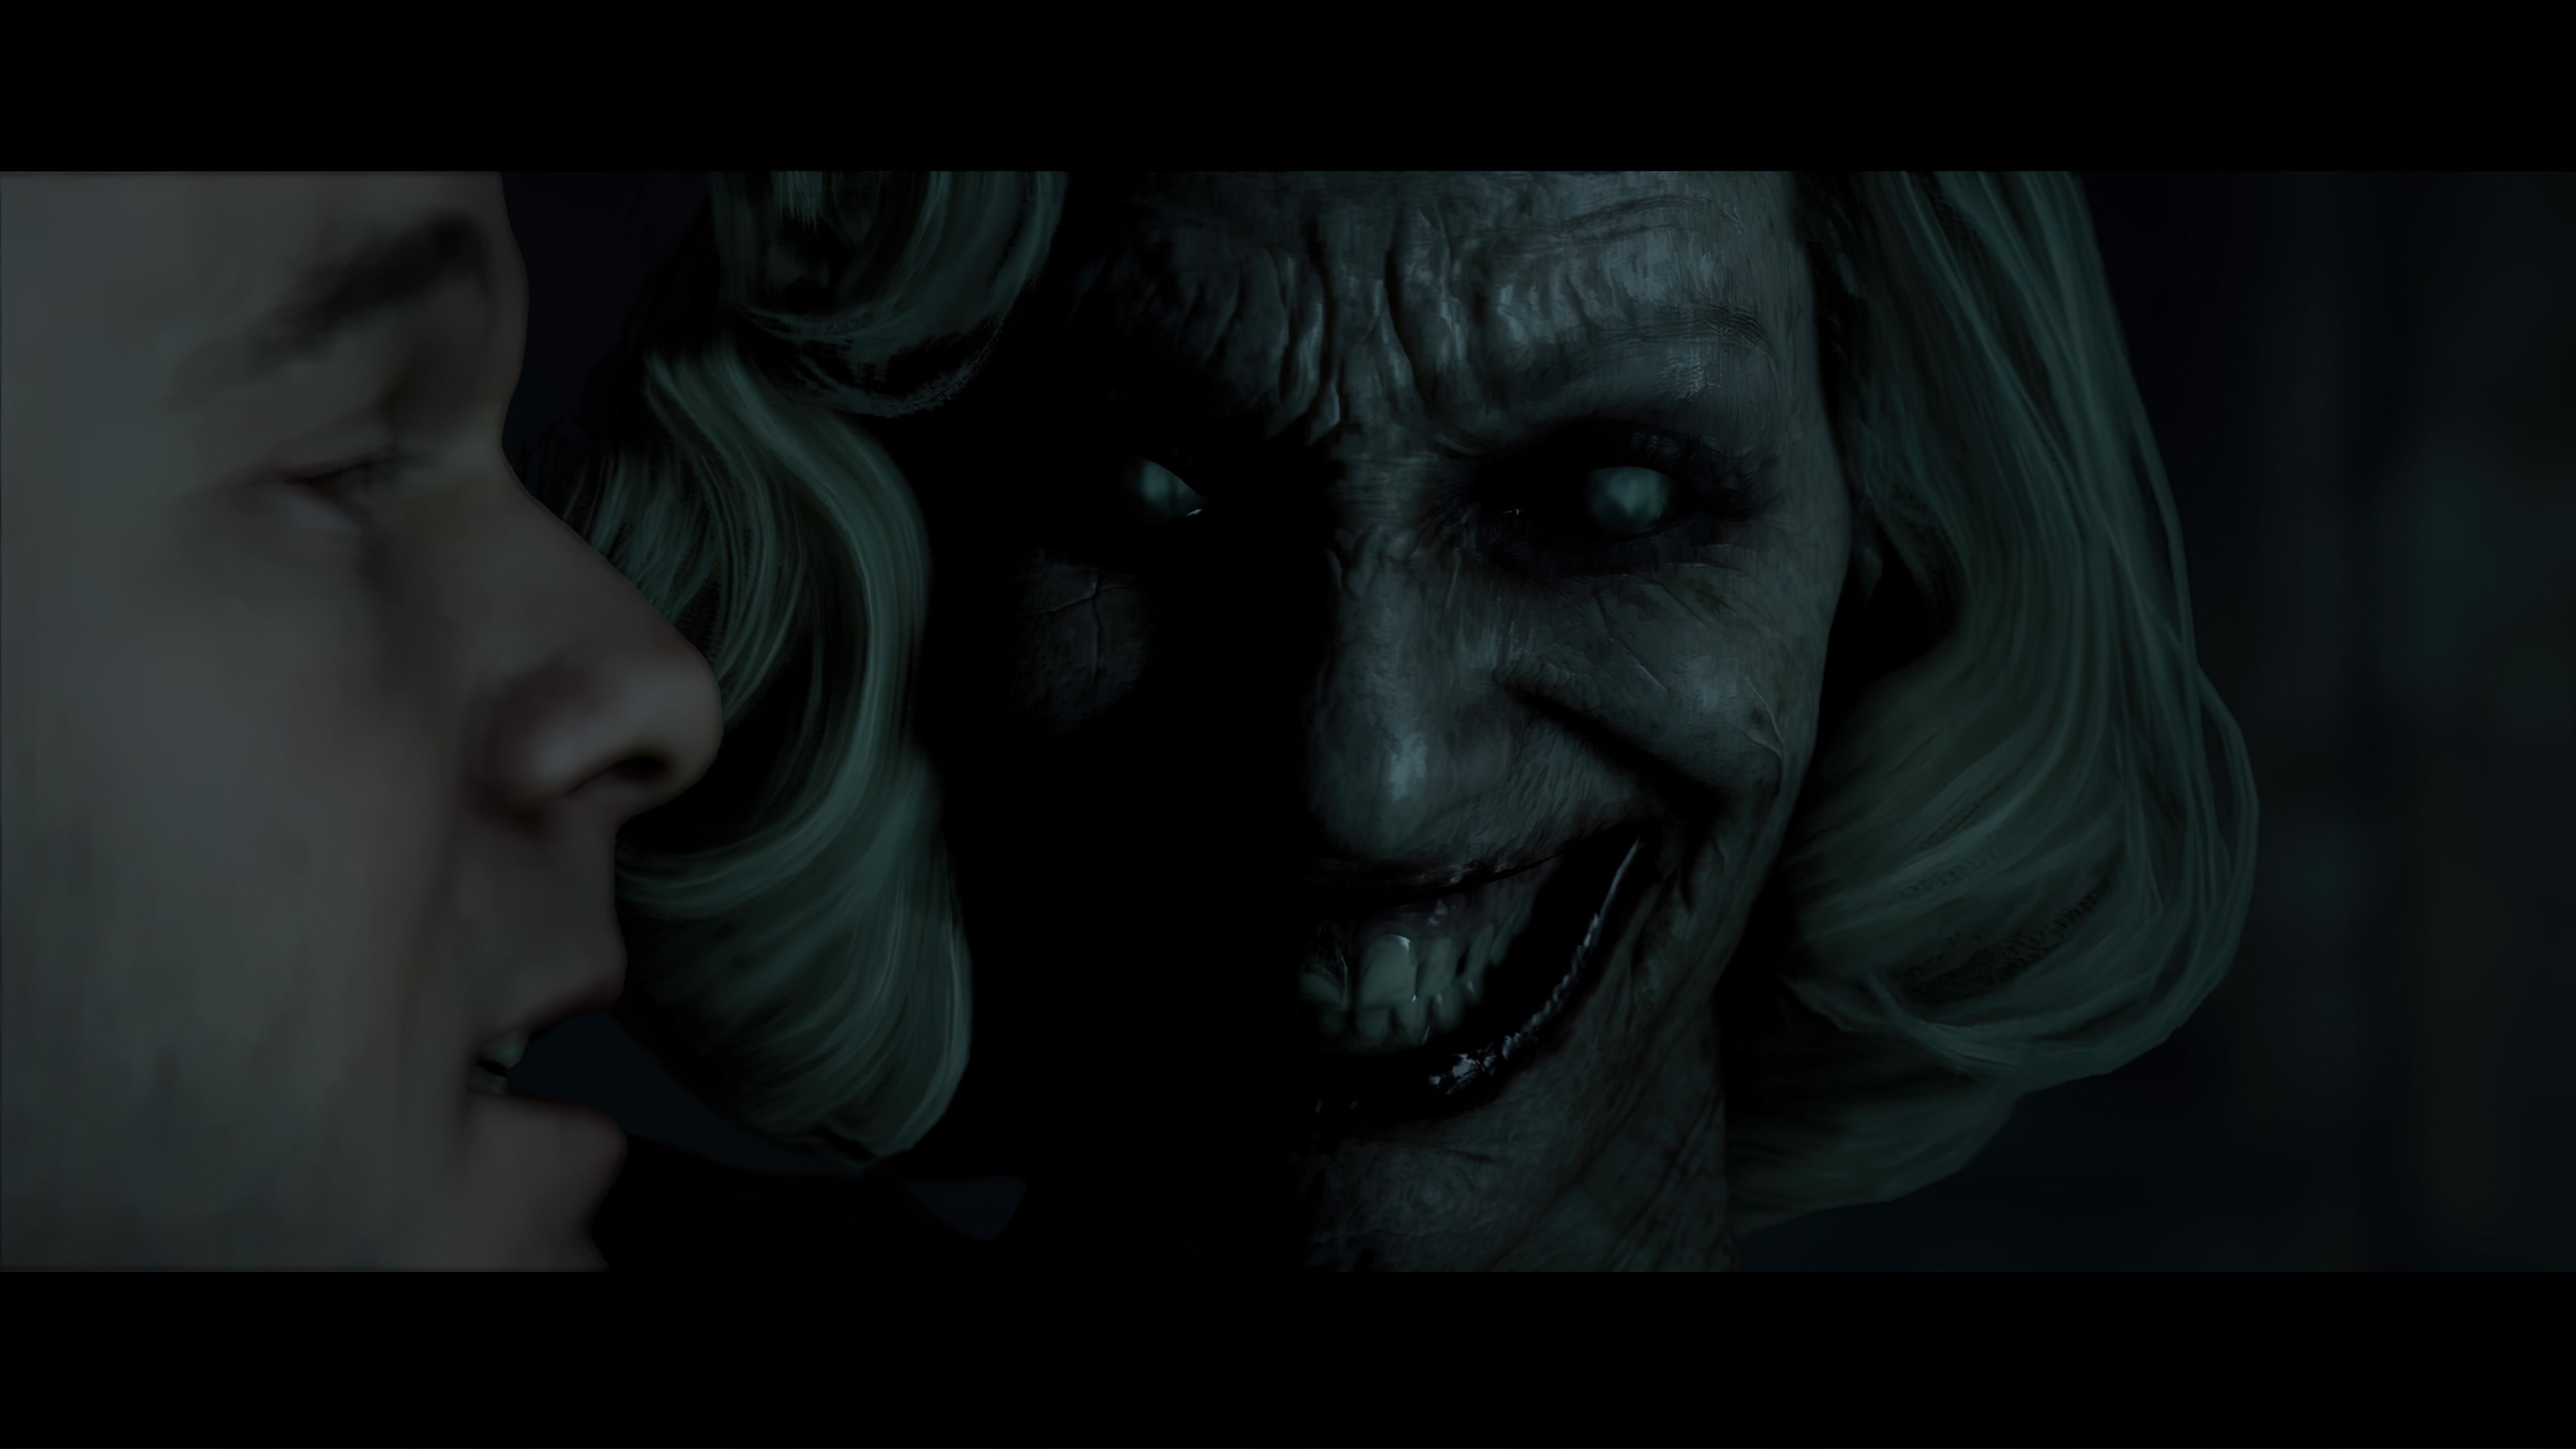 The Dark Pictures Anthology: The Devil in Me - PlayStation 4 em